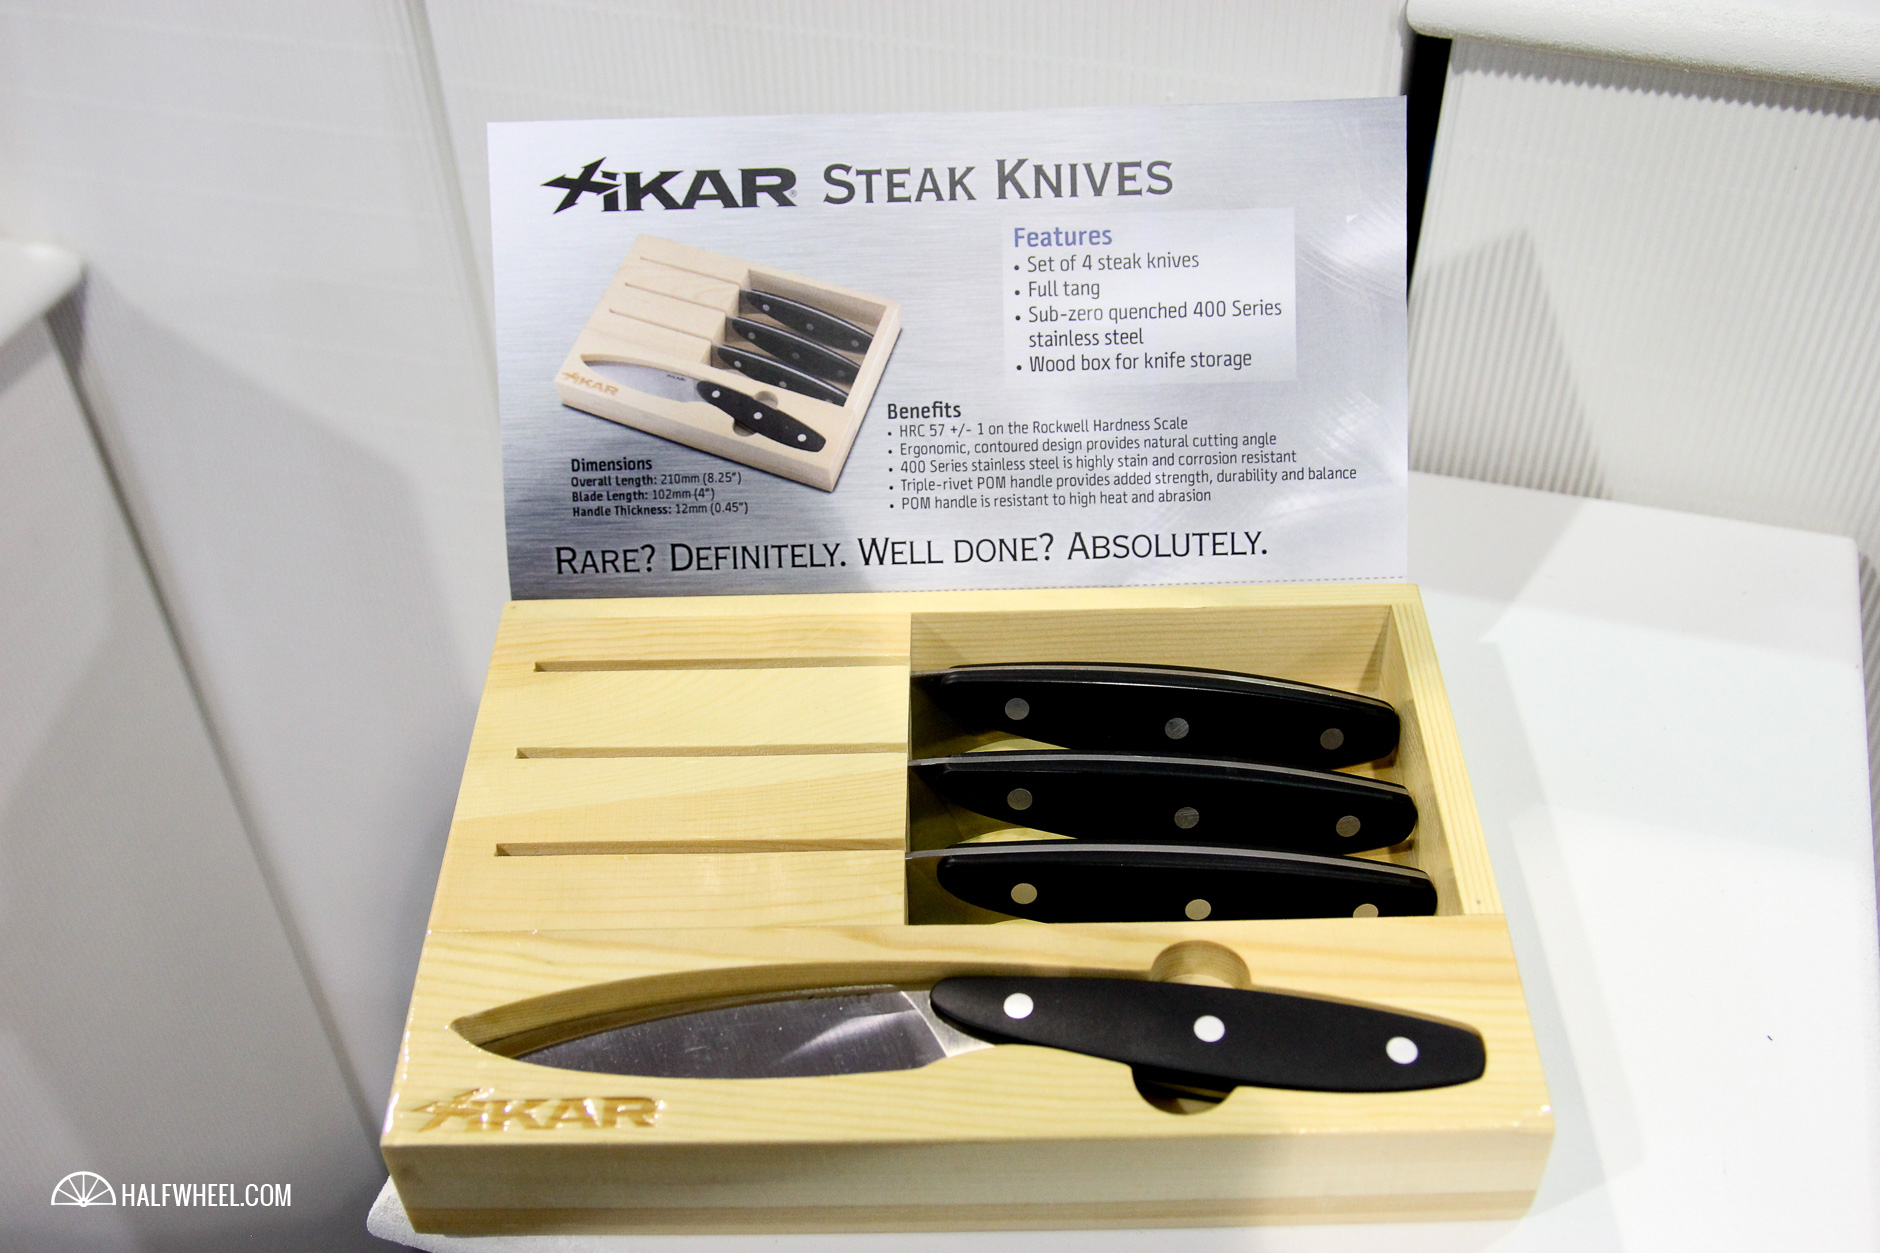 XIKAR Knives IPCPR 2016